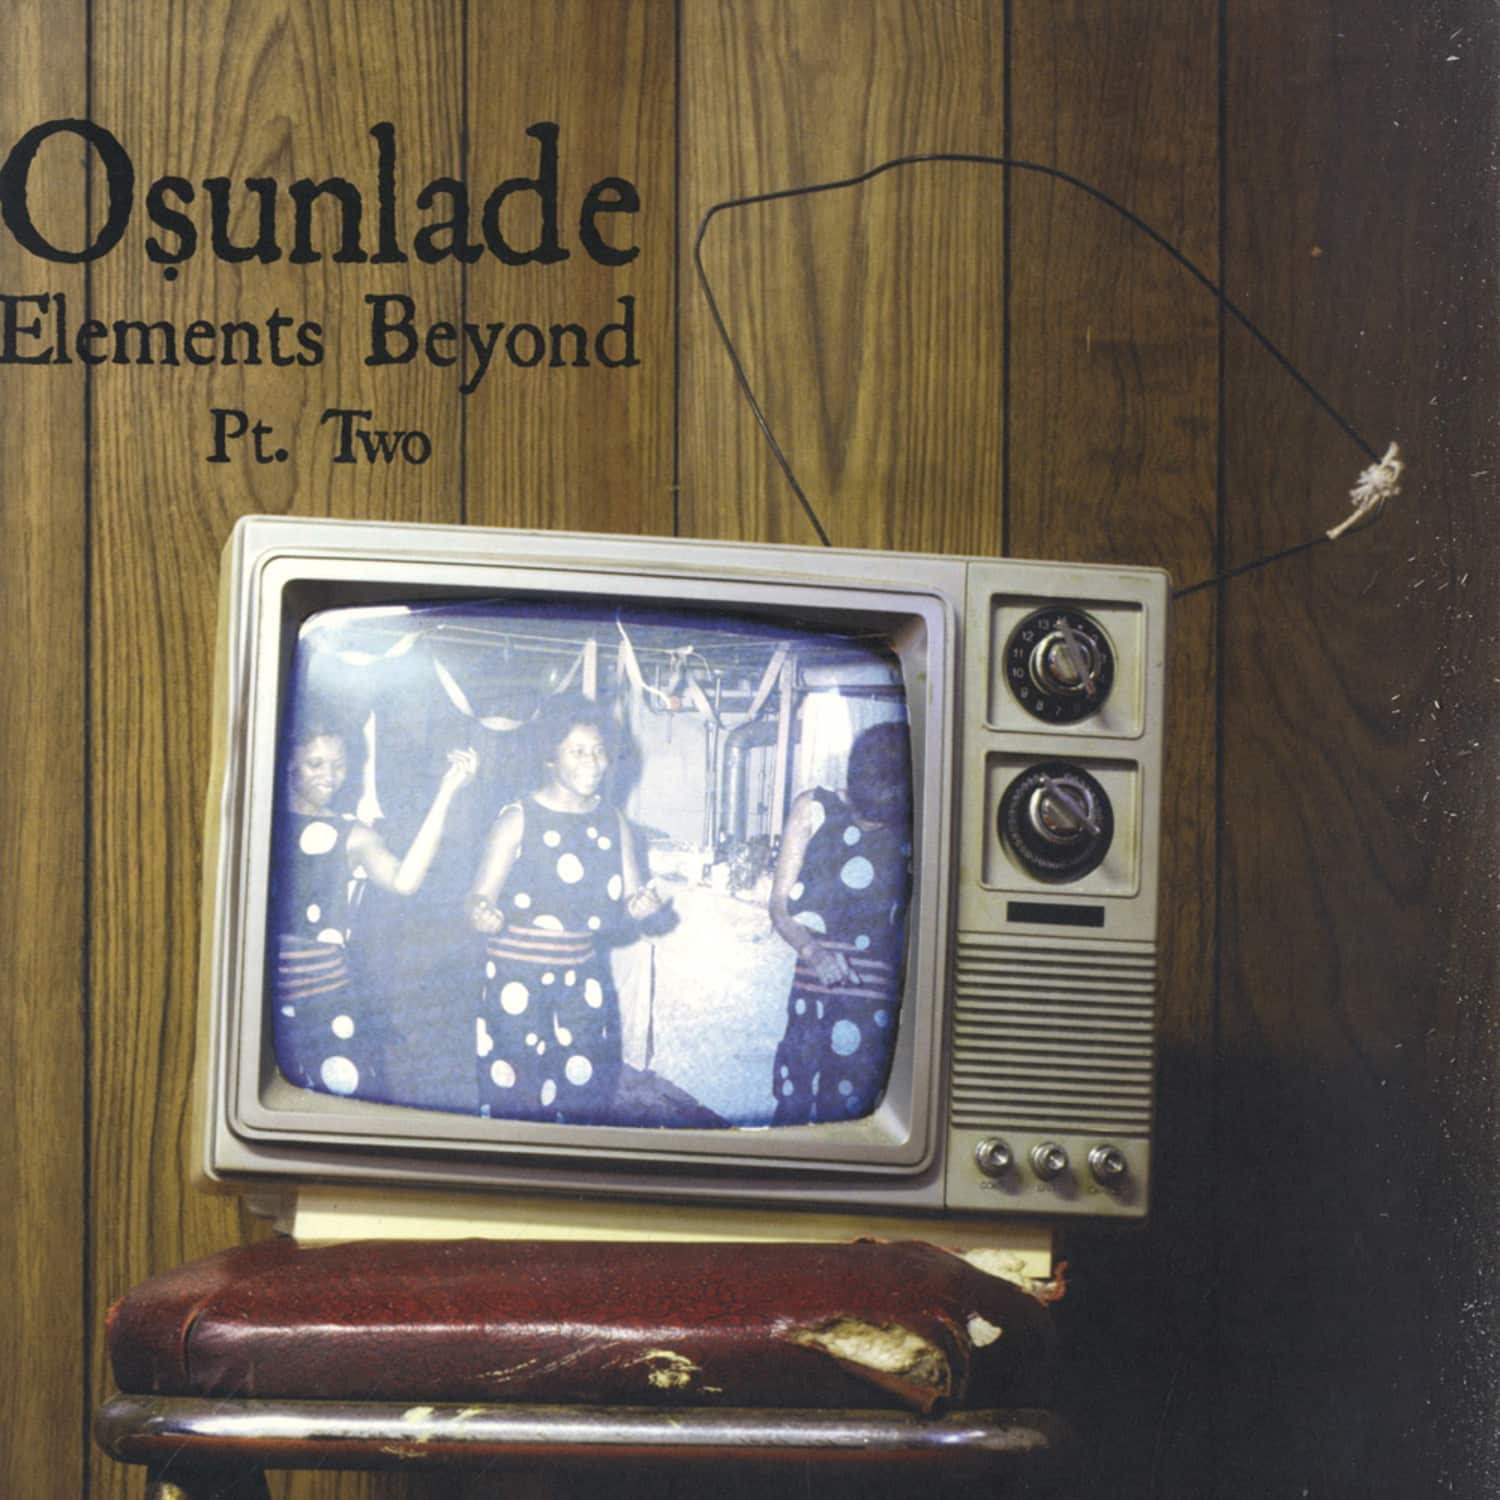 Osunlade - ELEMENTS BEYOND - PART 2